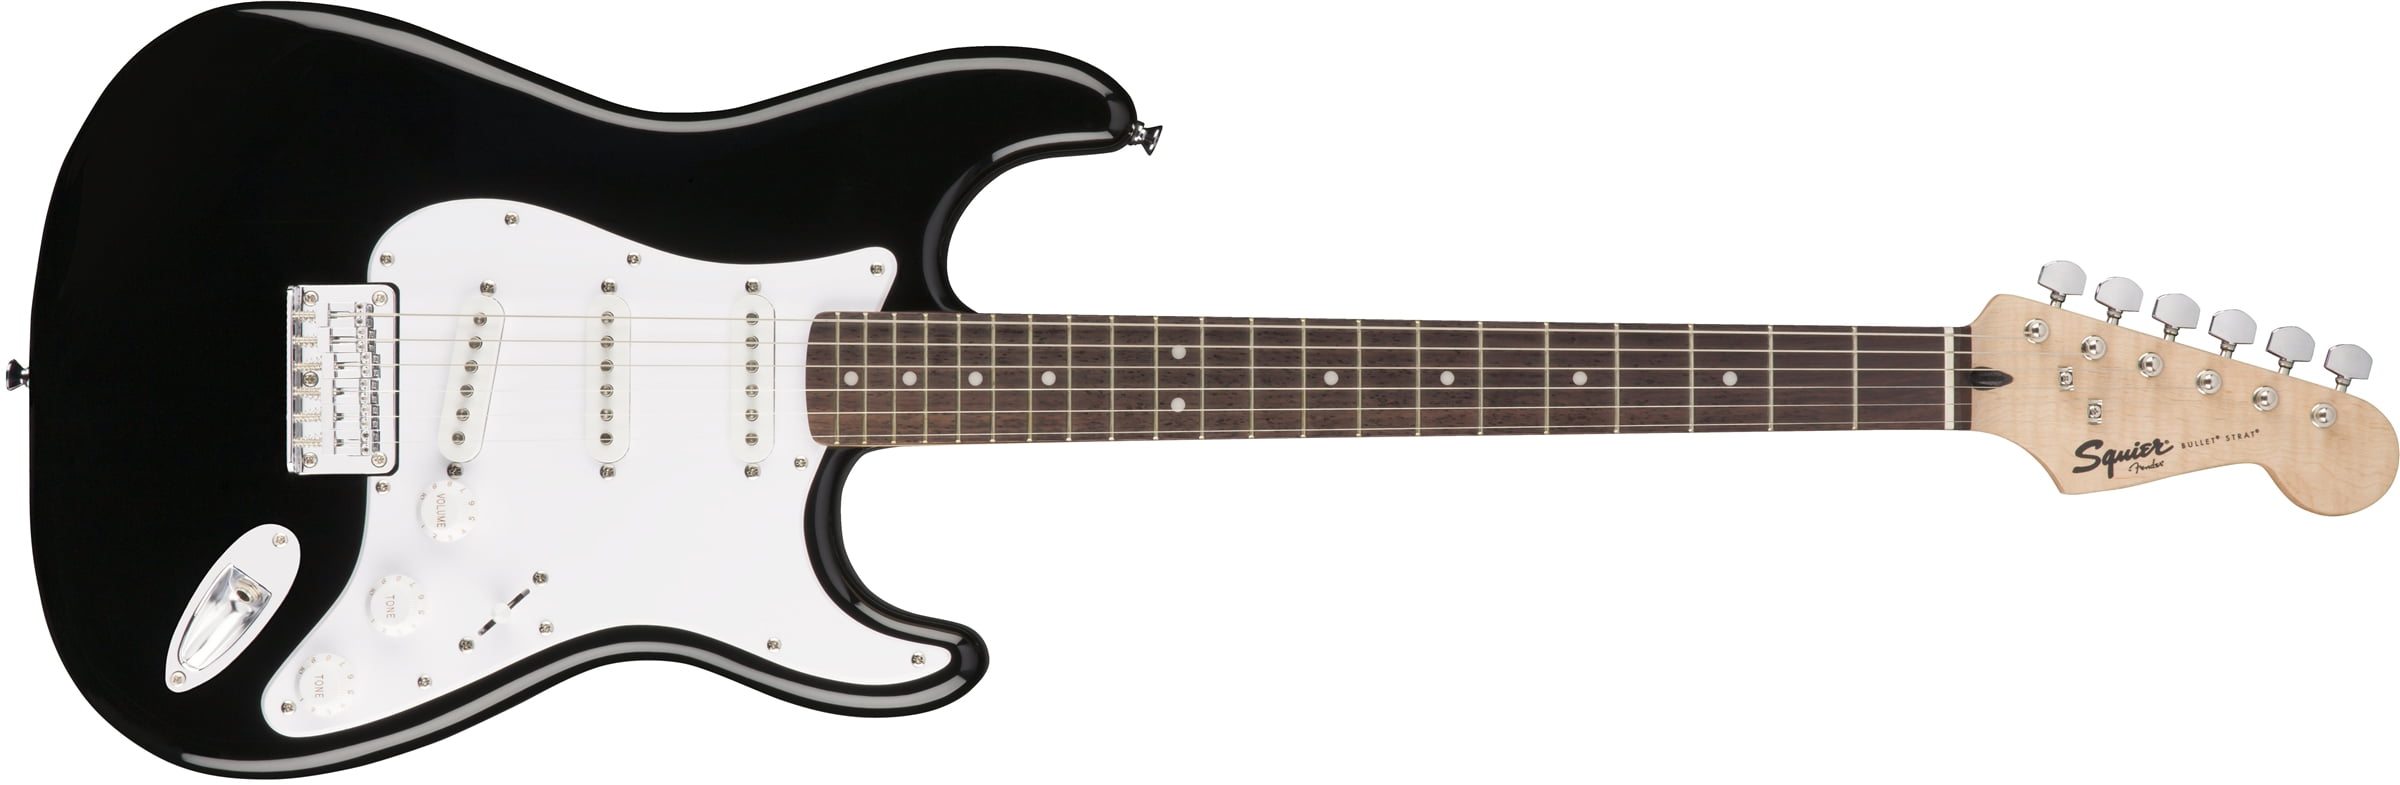 Fender Squier Bullet Strat HT Electric Guitar, Rosewood Fingerboard ...